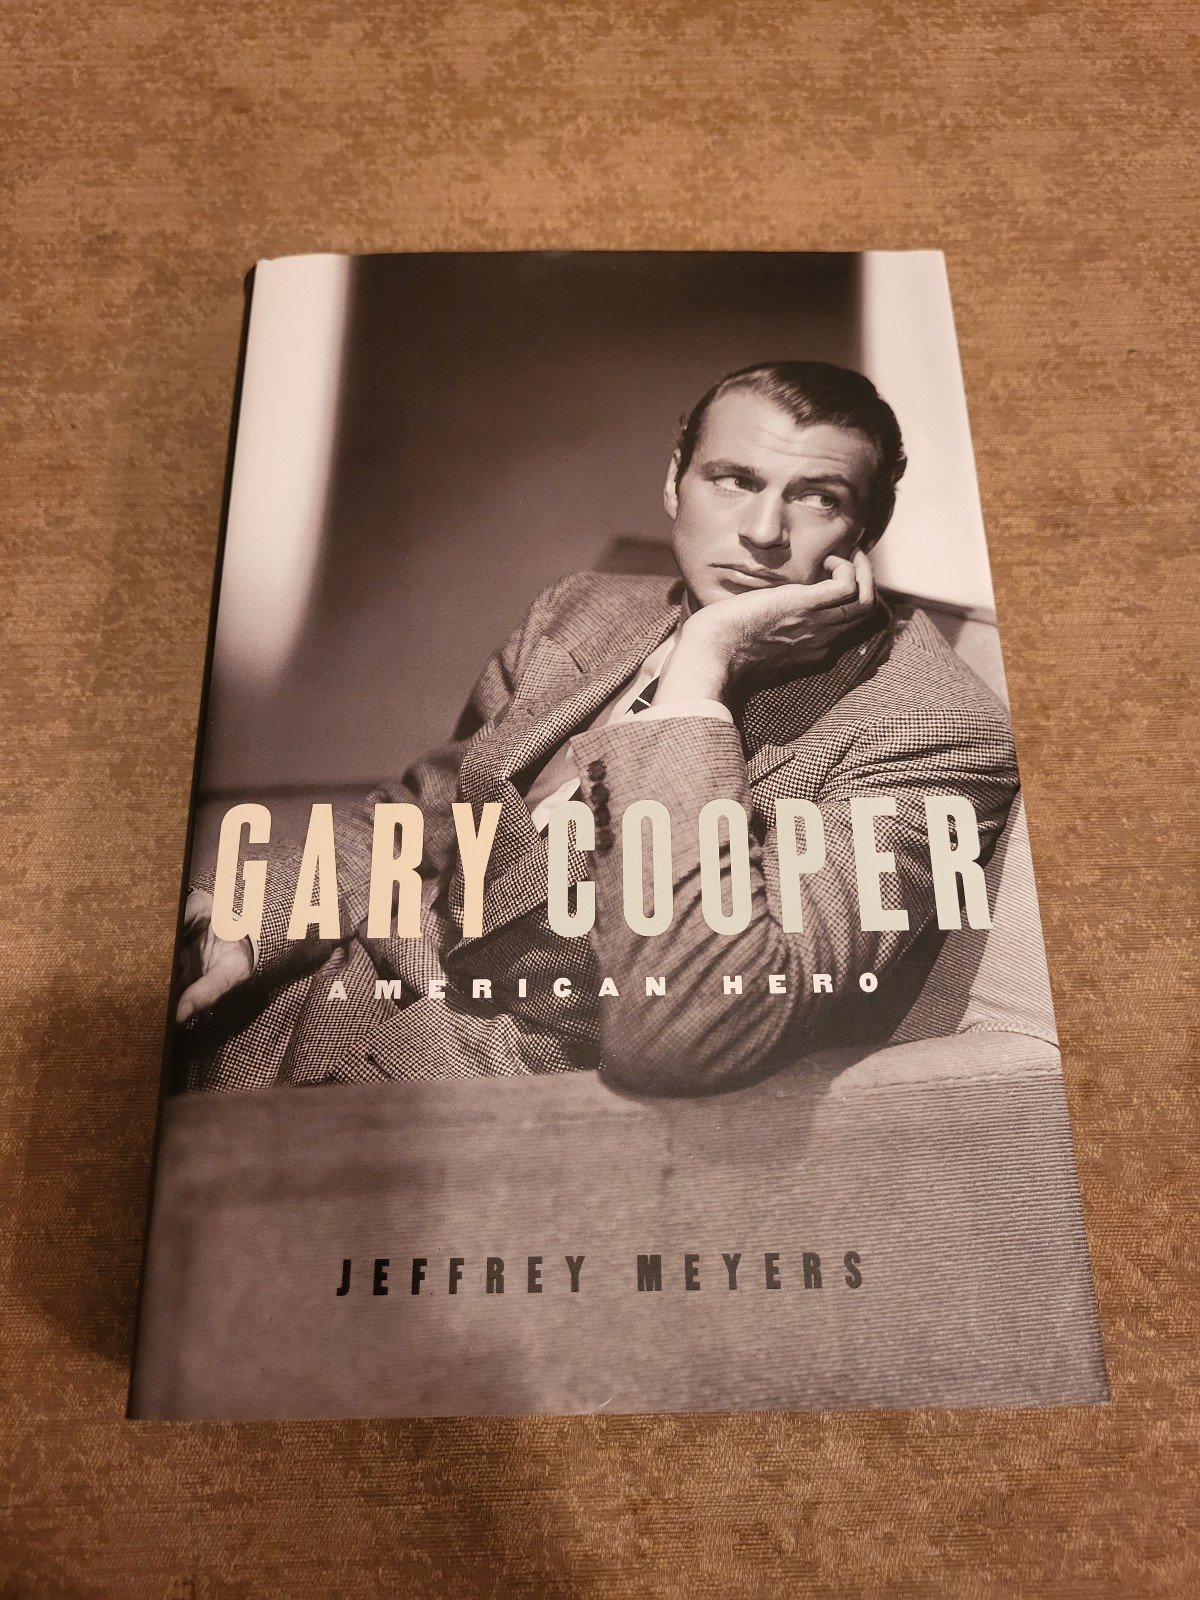 Gary Cooper American Hero by Jeffery Meyers f4gO2m5ml